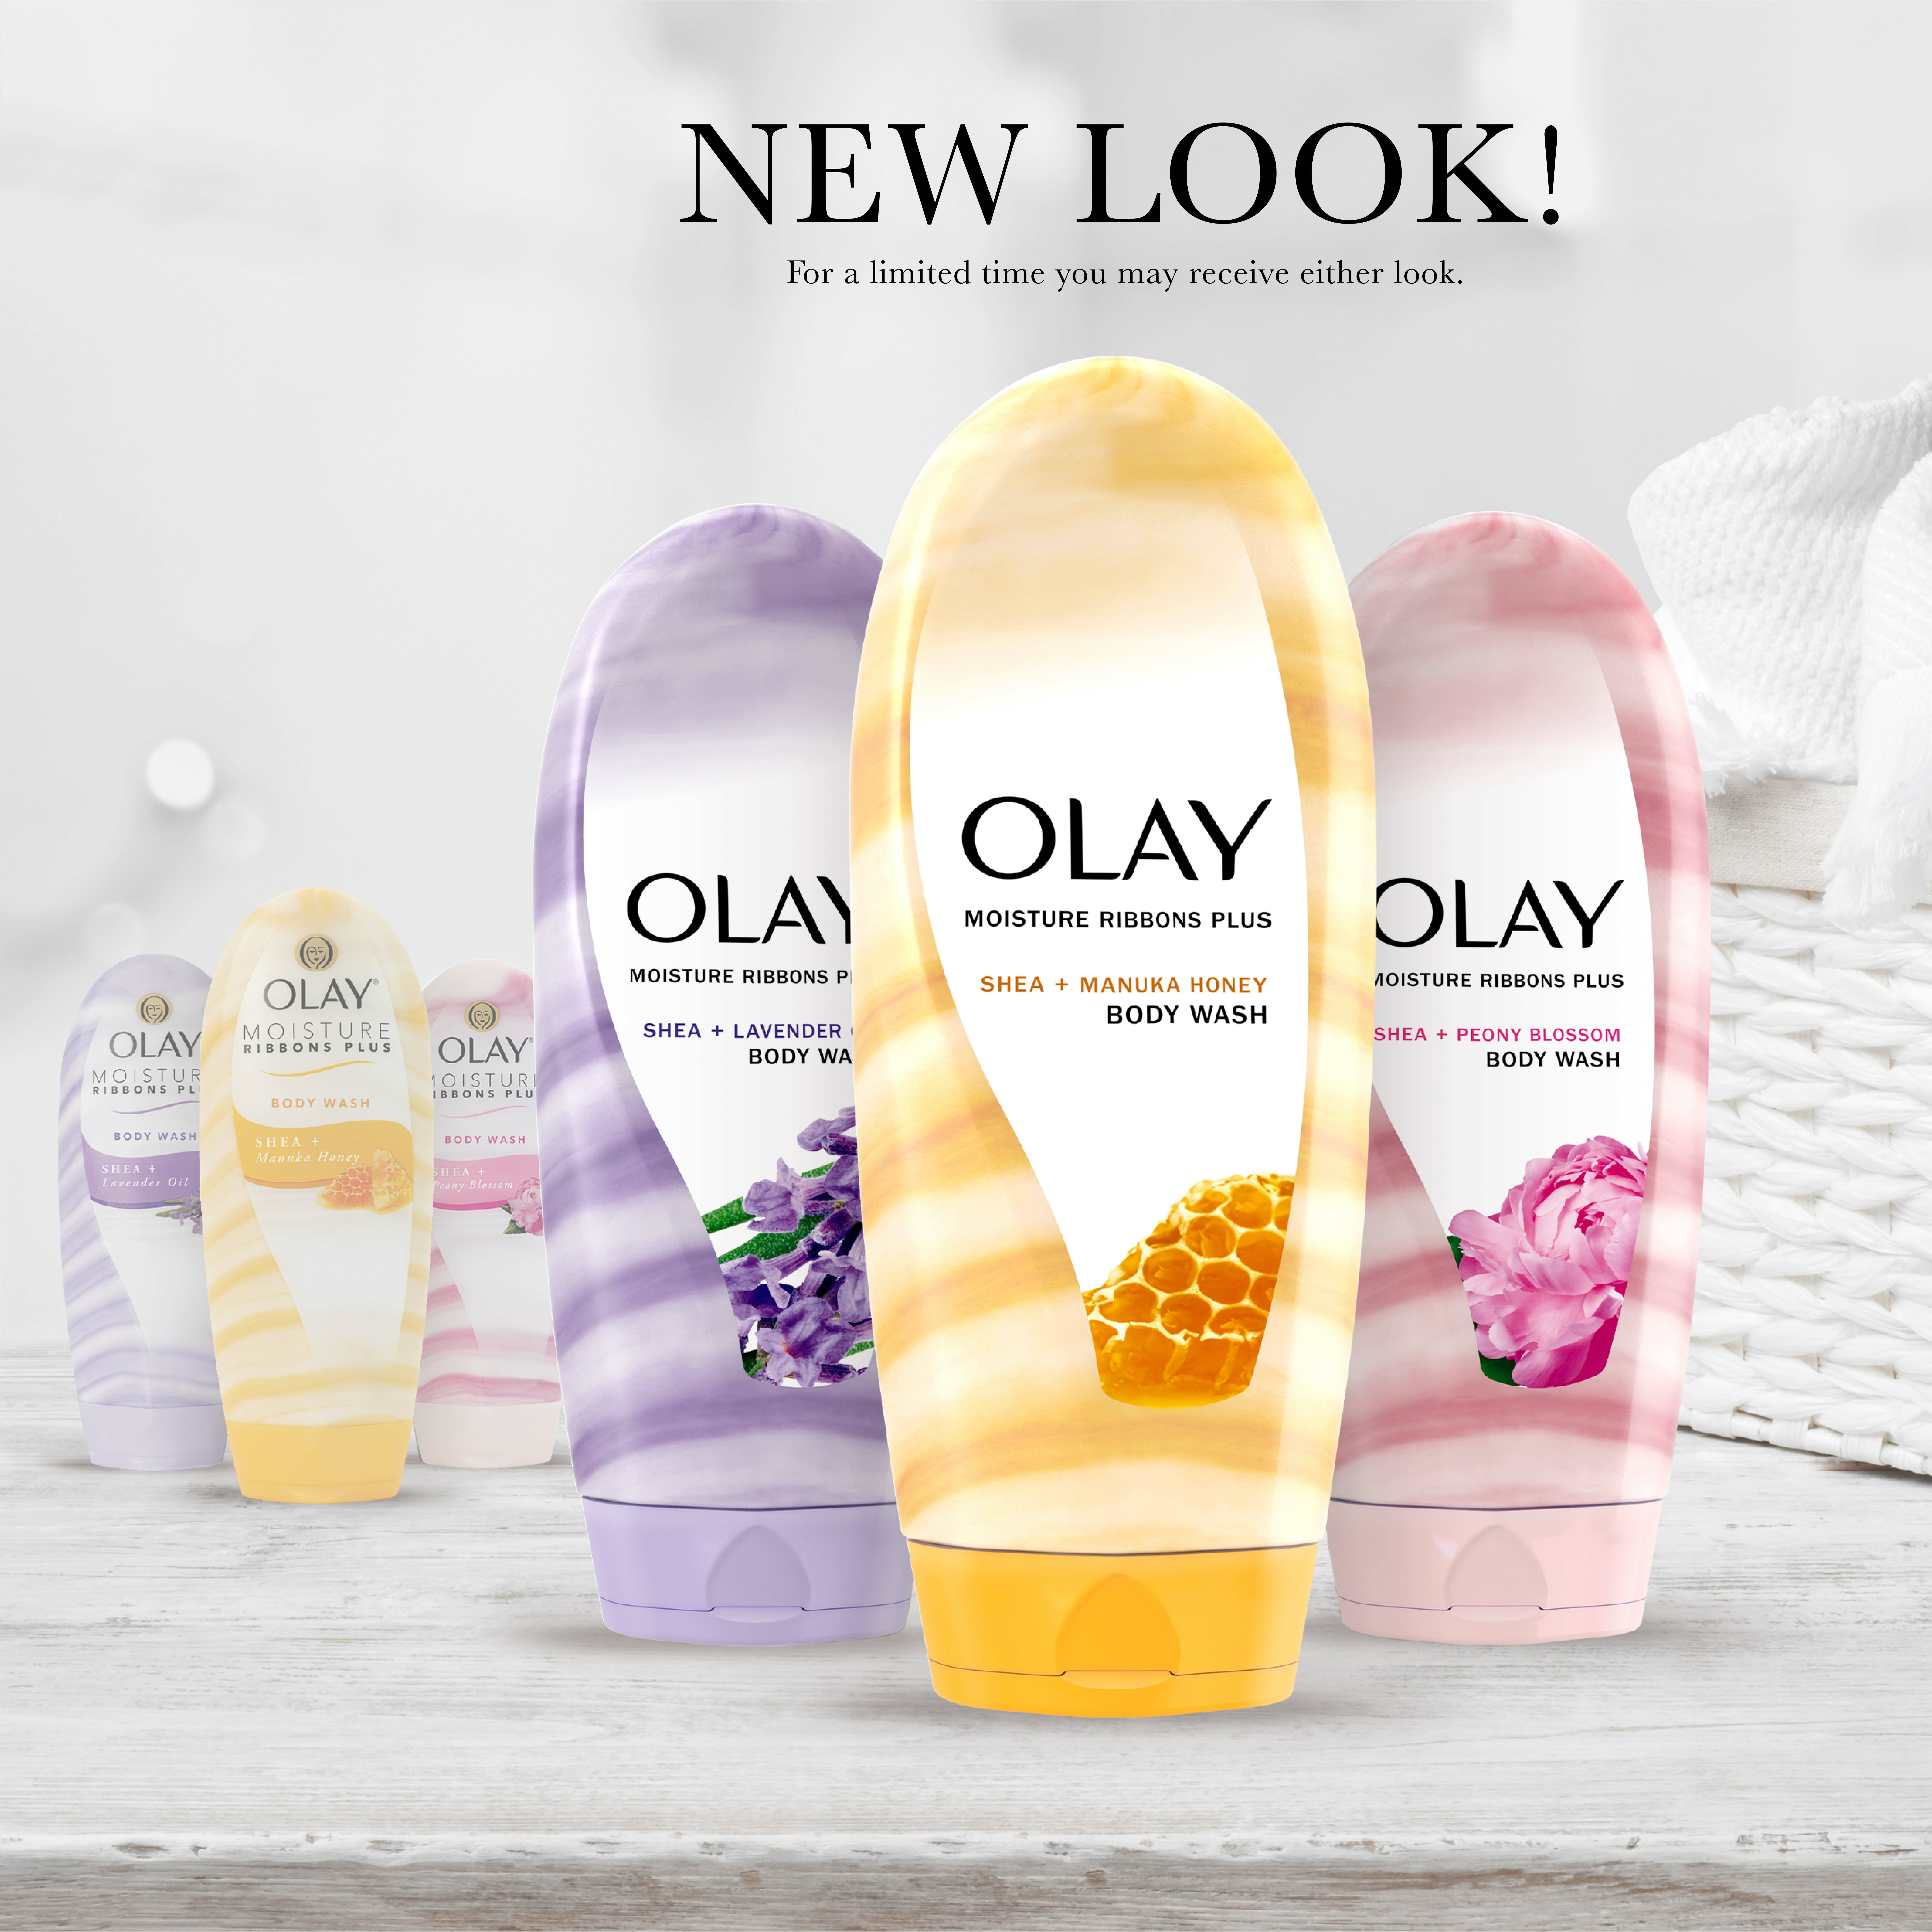 Olay Moisture Ribbons Plus Shea & Lavender Oil Body Wash, 18.0 OZ